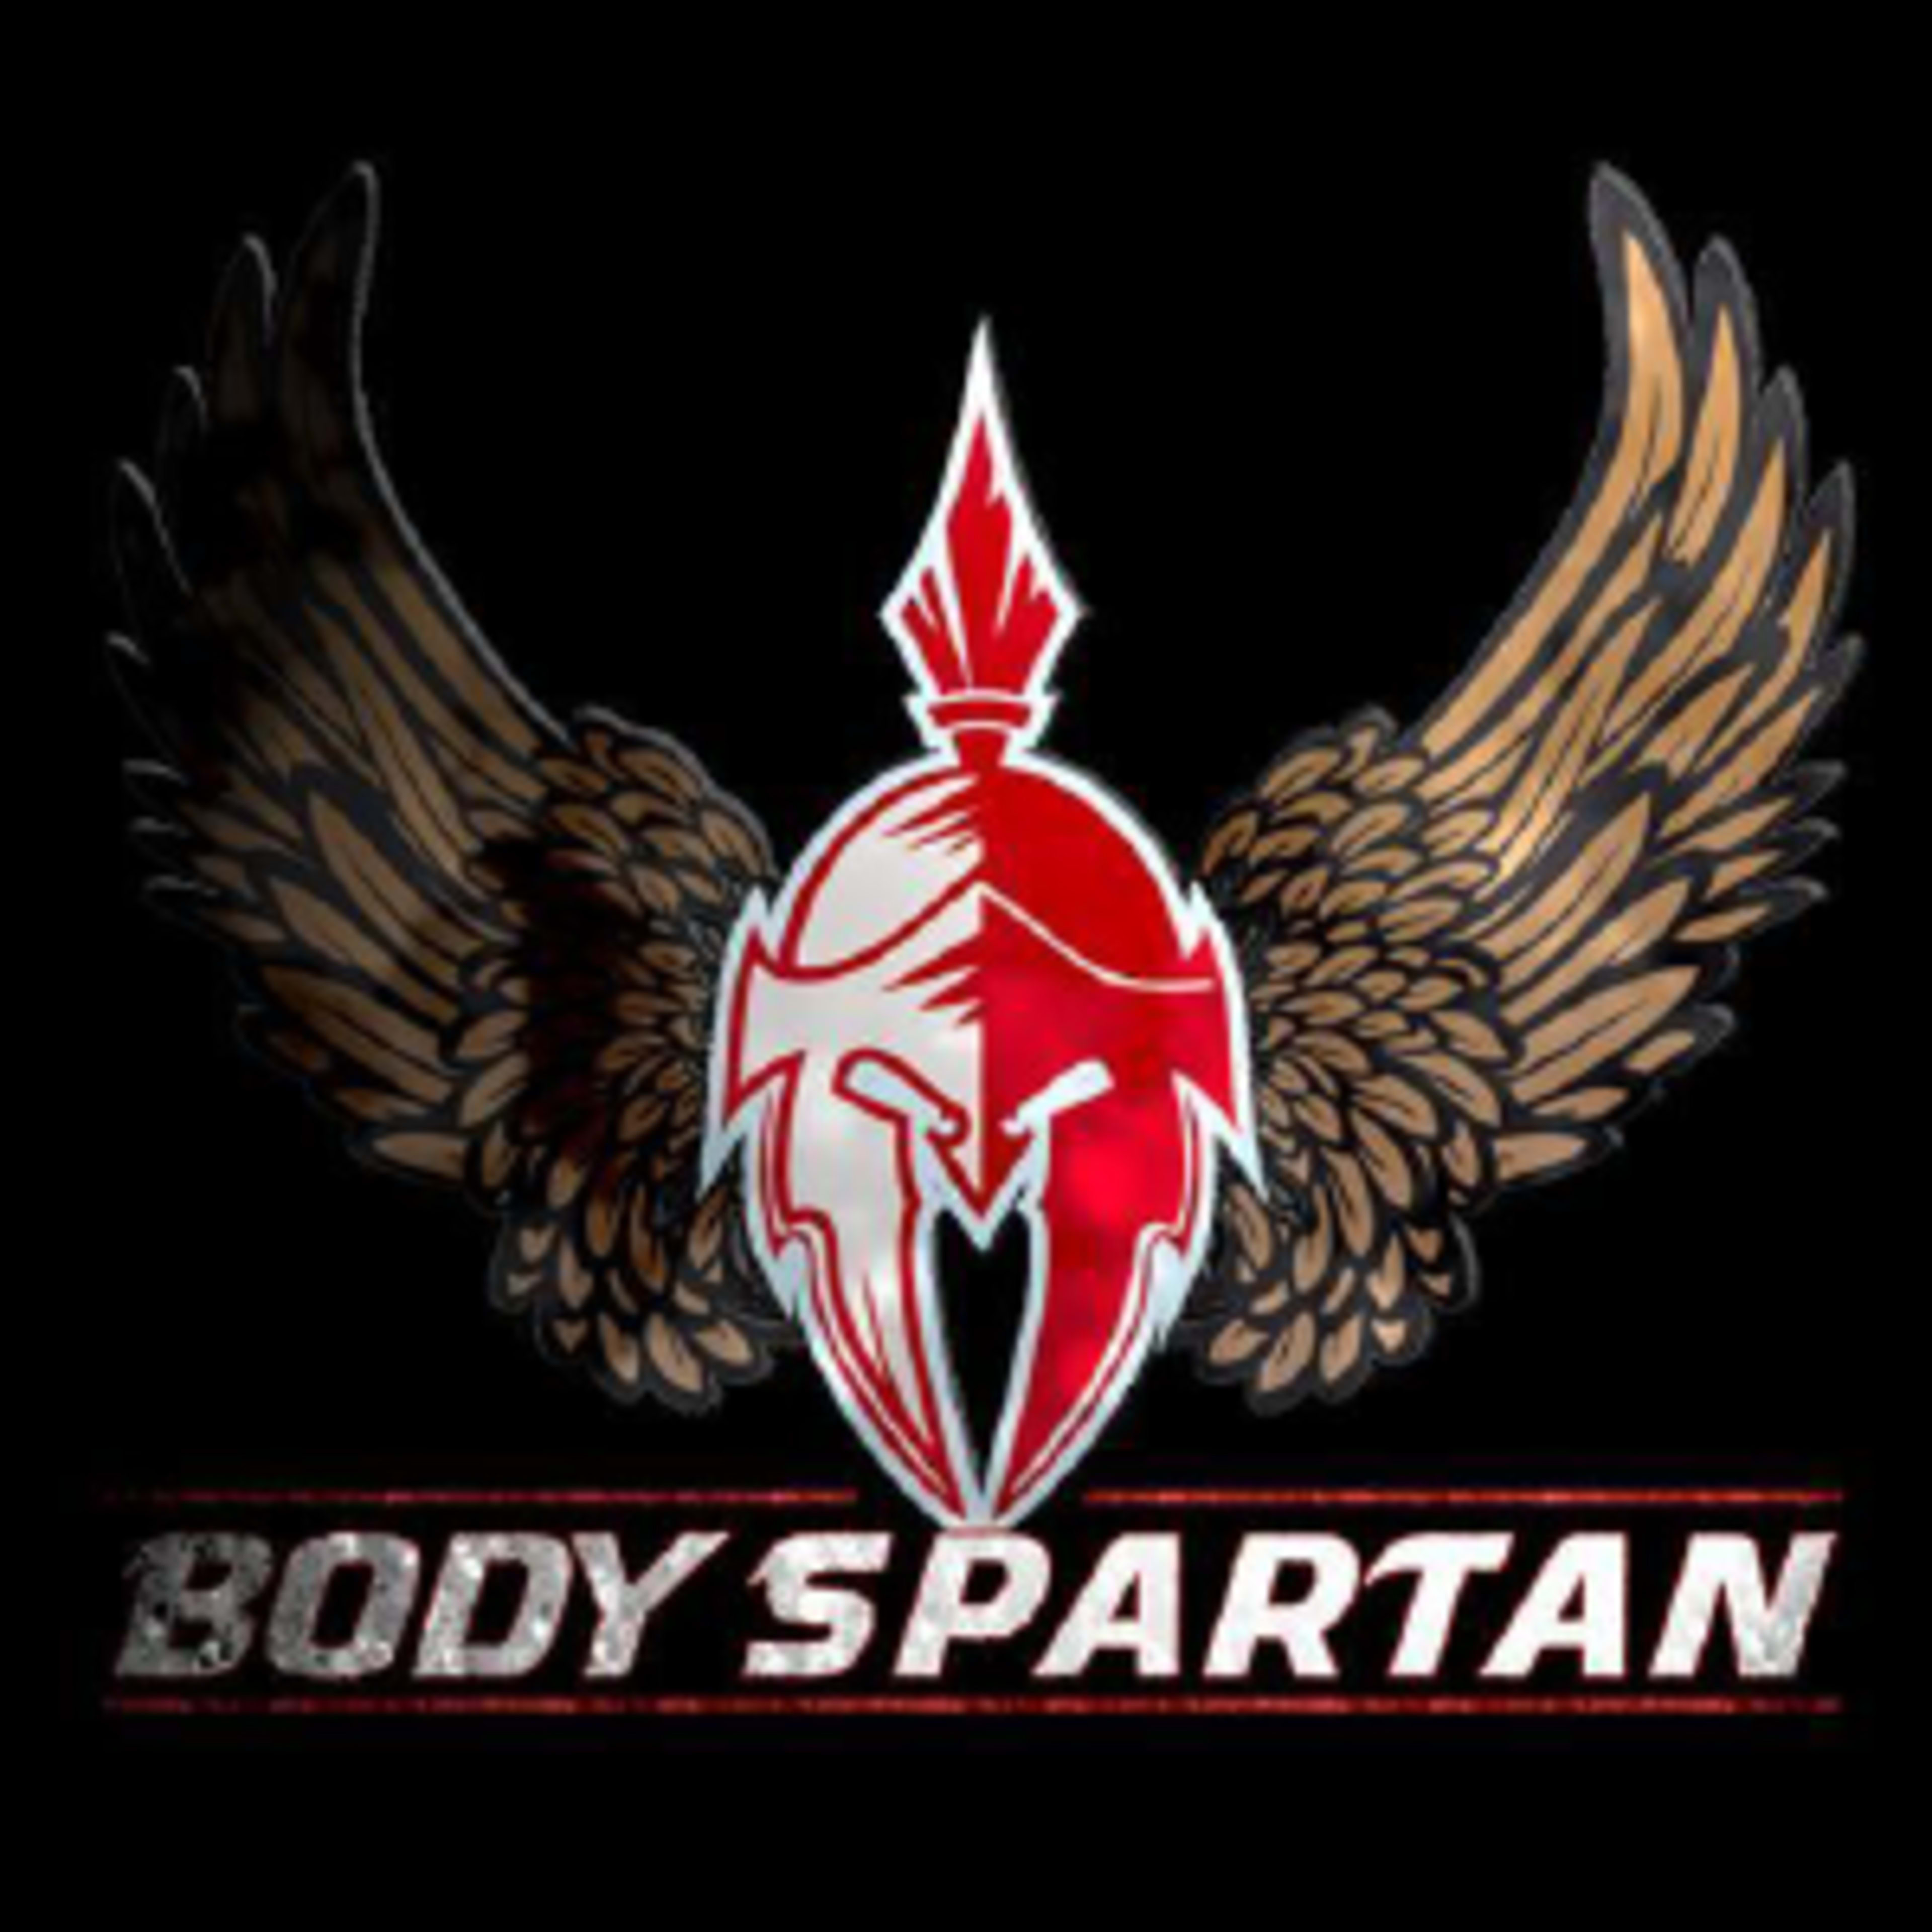 Body Spartan Code